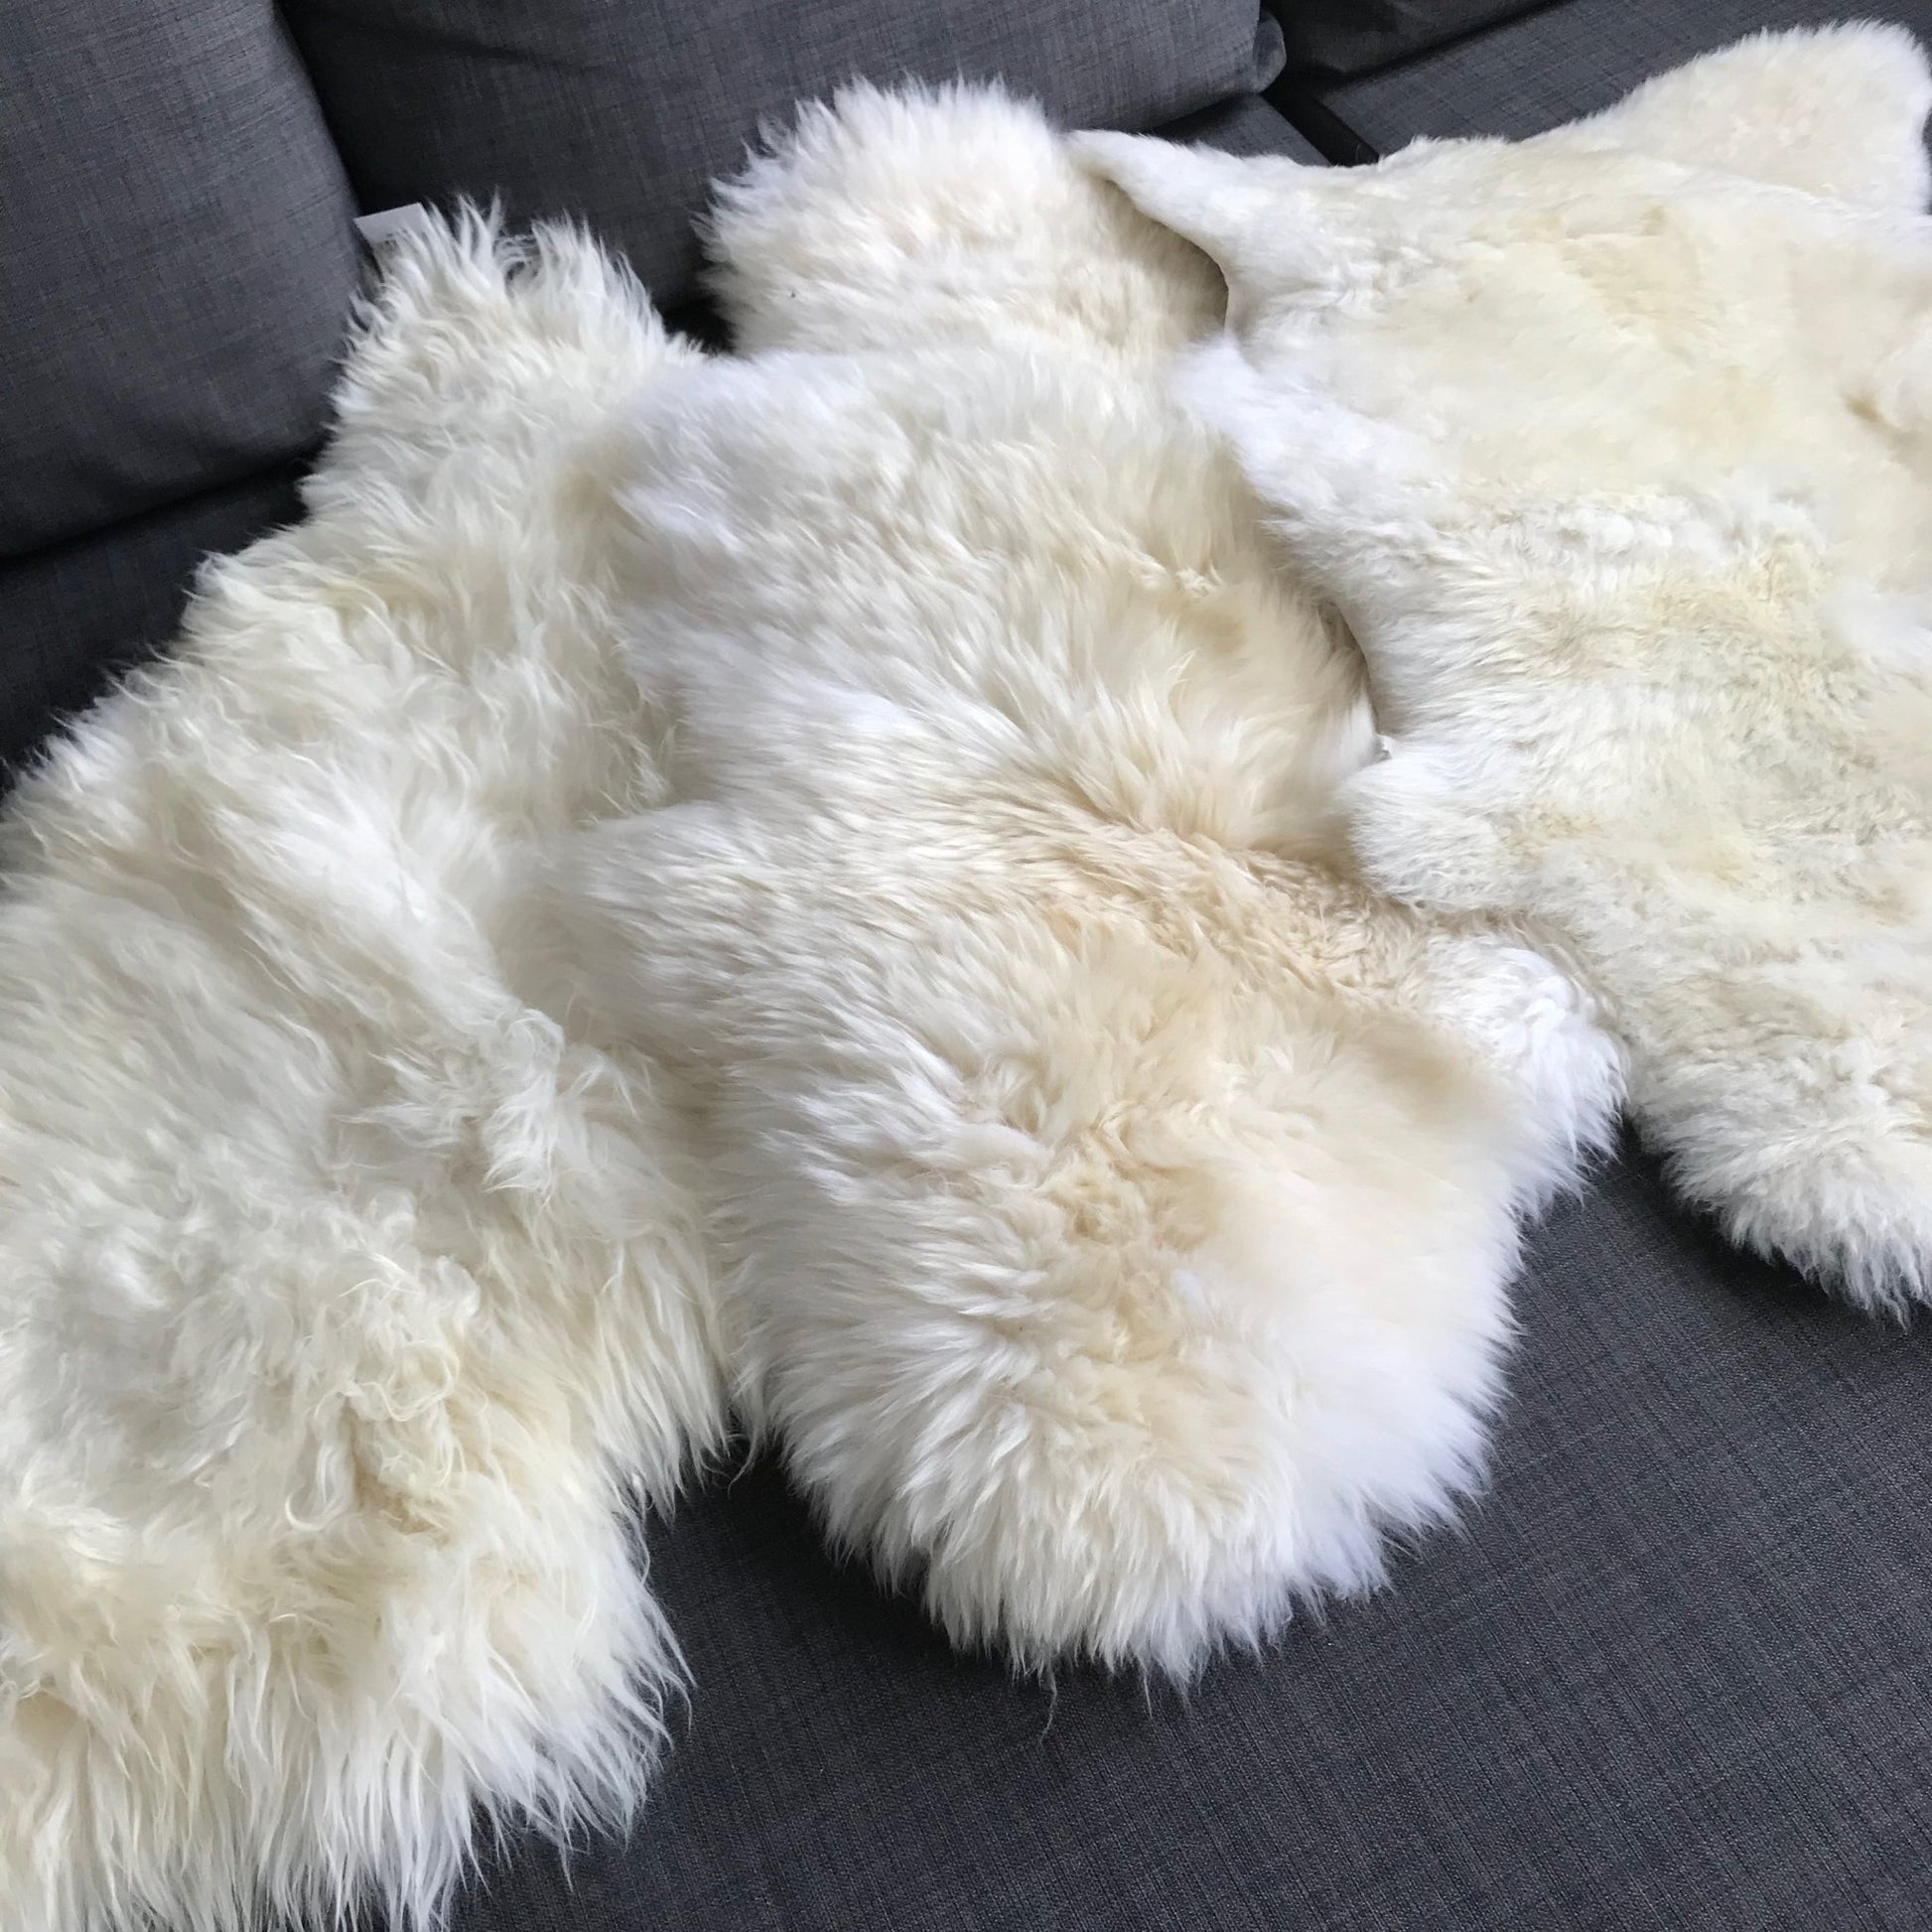 Luxurious British Sheepskin Rug Hide Ivory White Small Long Fur - Wildash London